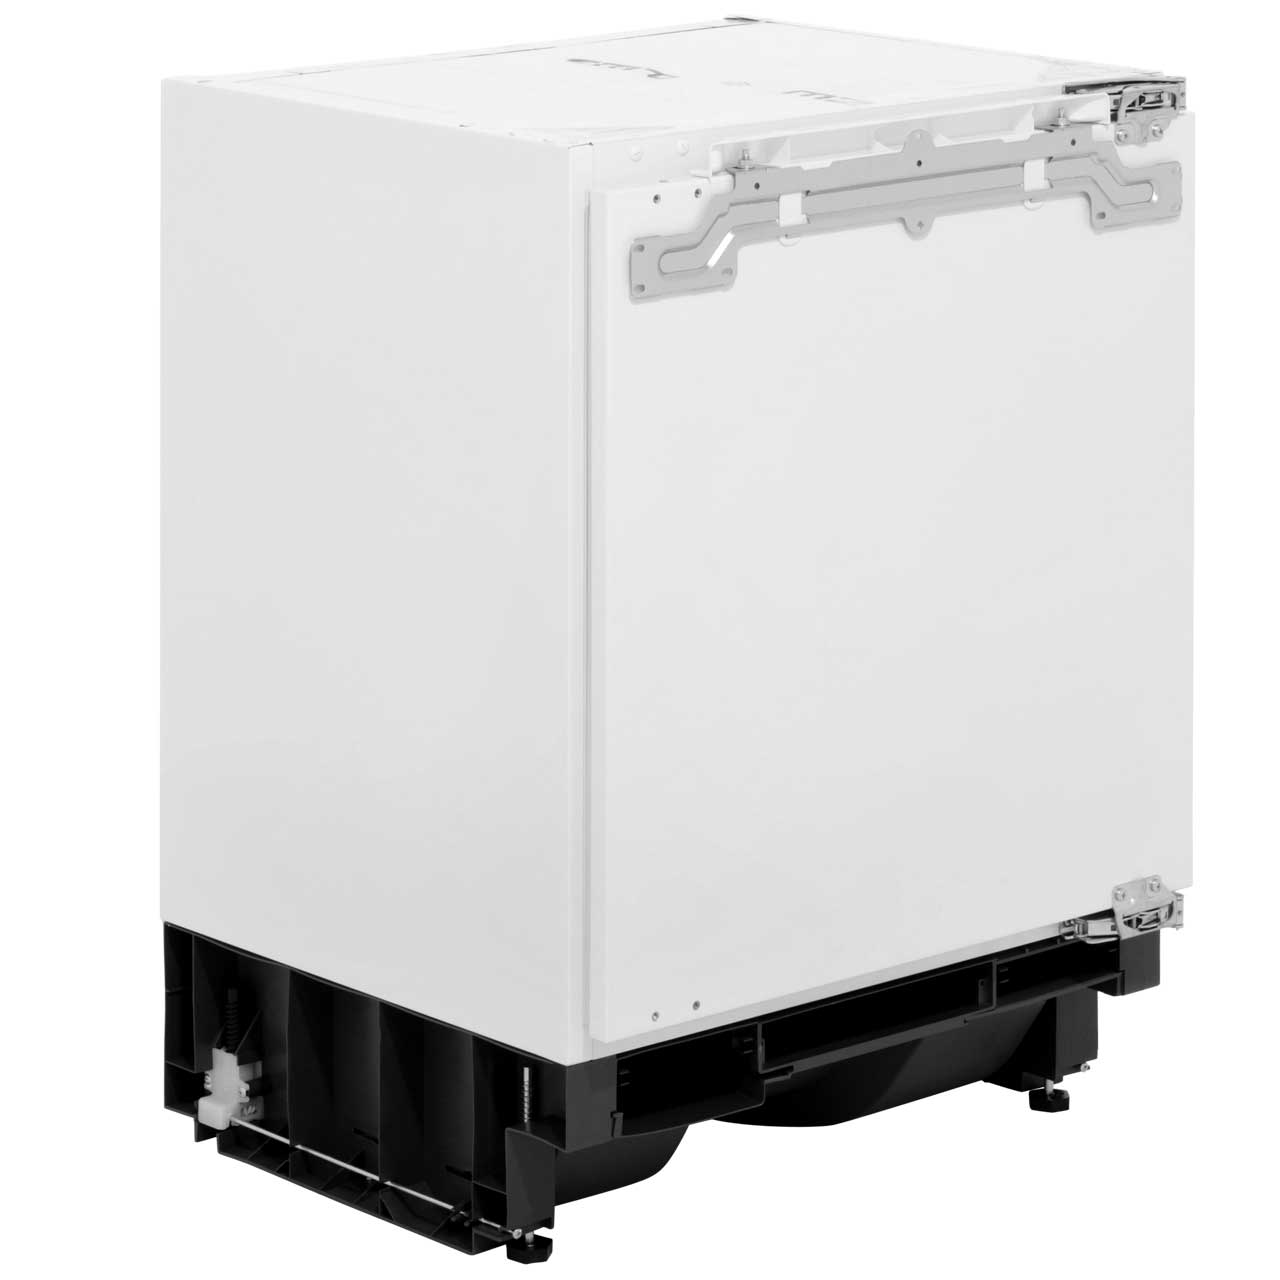 Zanussi ZQA12430DA Integrated Under Counter Fridge with Ice Box Review